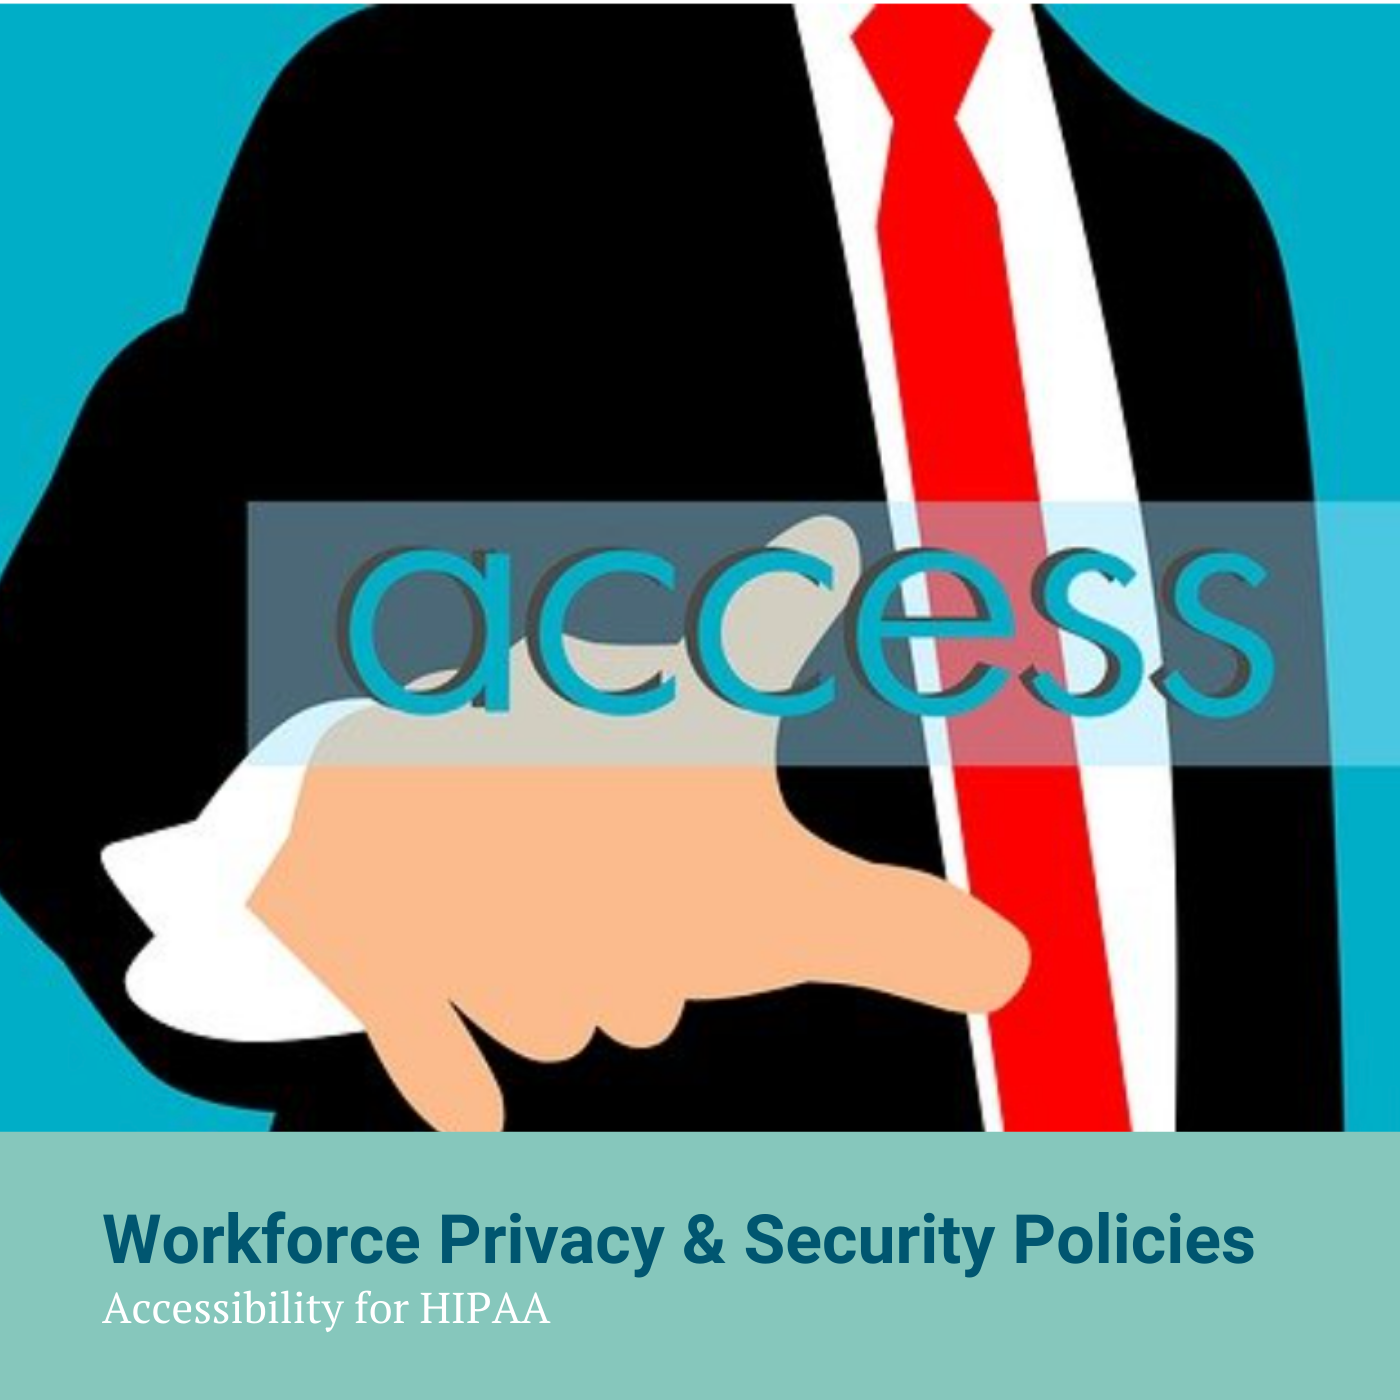 Workforce Privacy & Security Policies Image